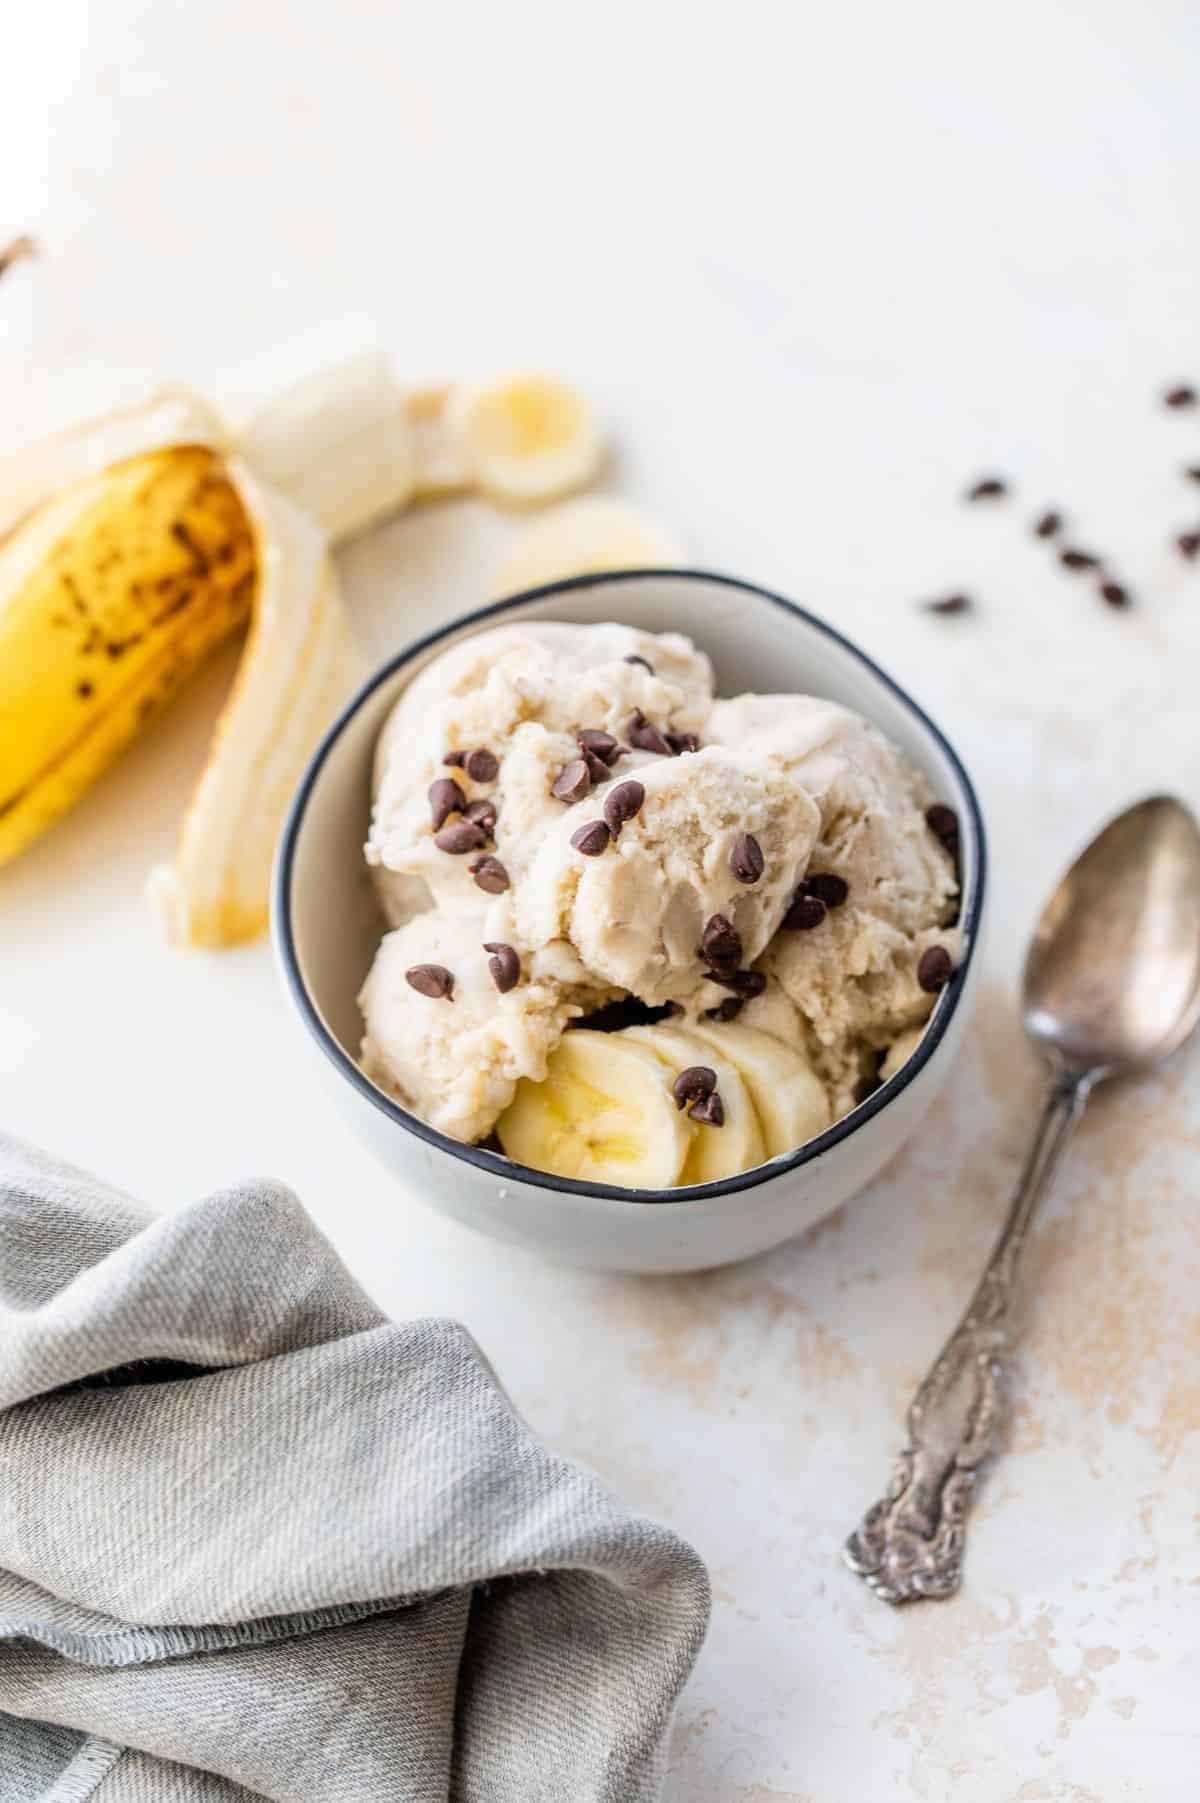 scoops of banana ice cream in a small bowl near a banana